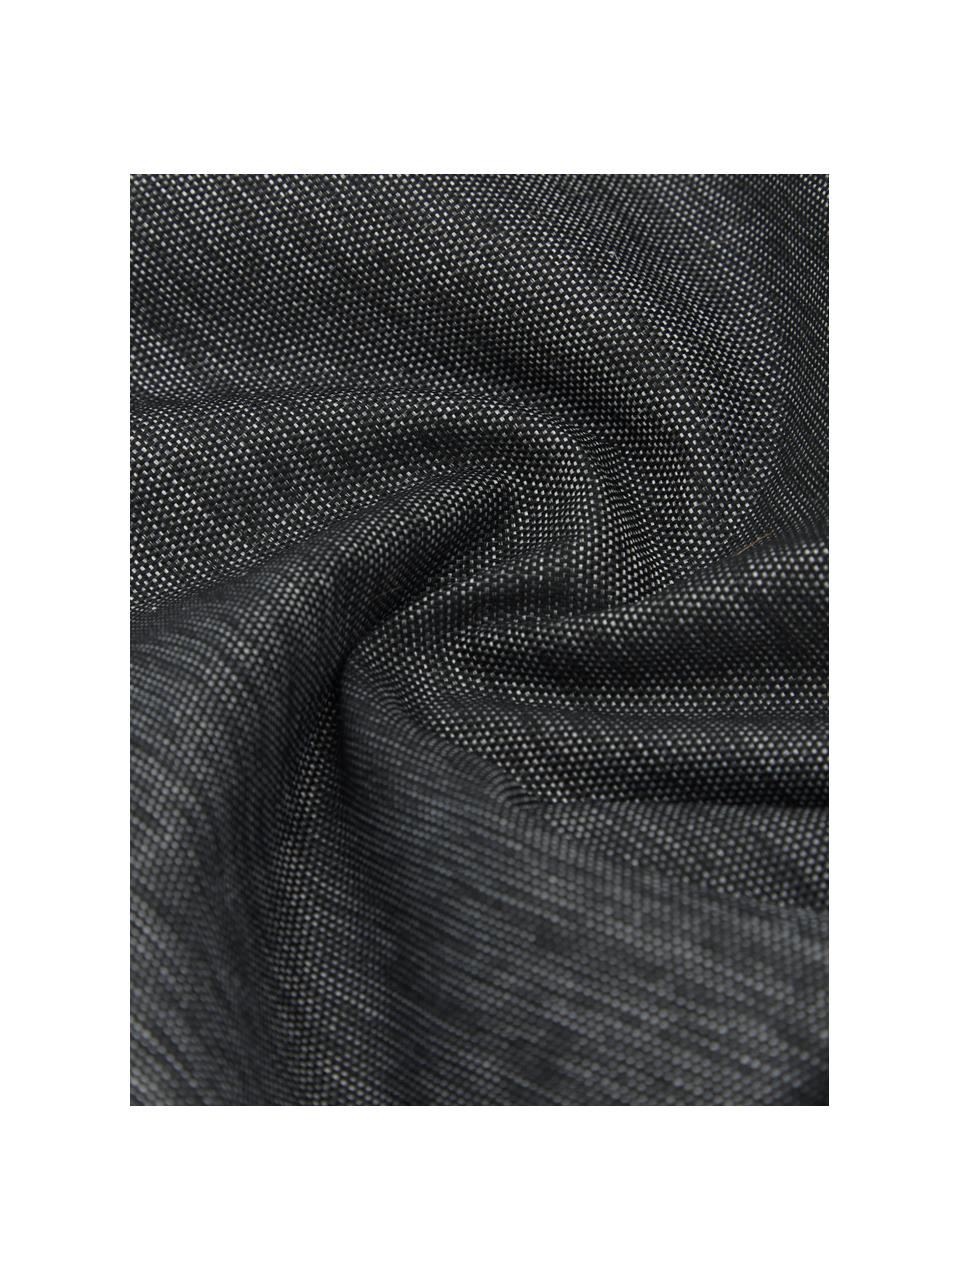 Kissenhülle Arte, 100% Polyester, Schwarz, Weiss, B 45 x L 45 cm